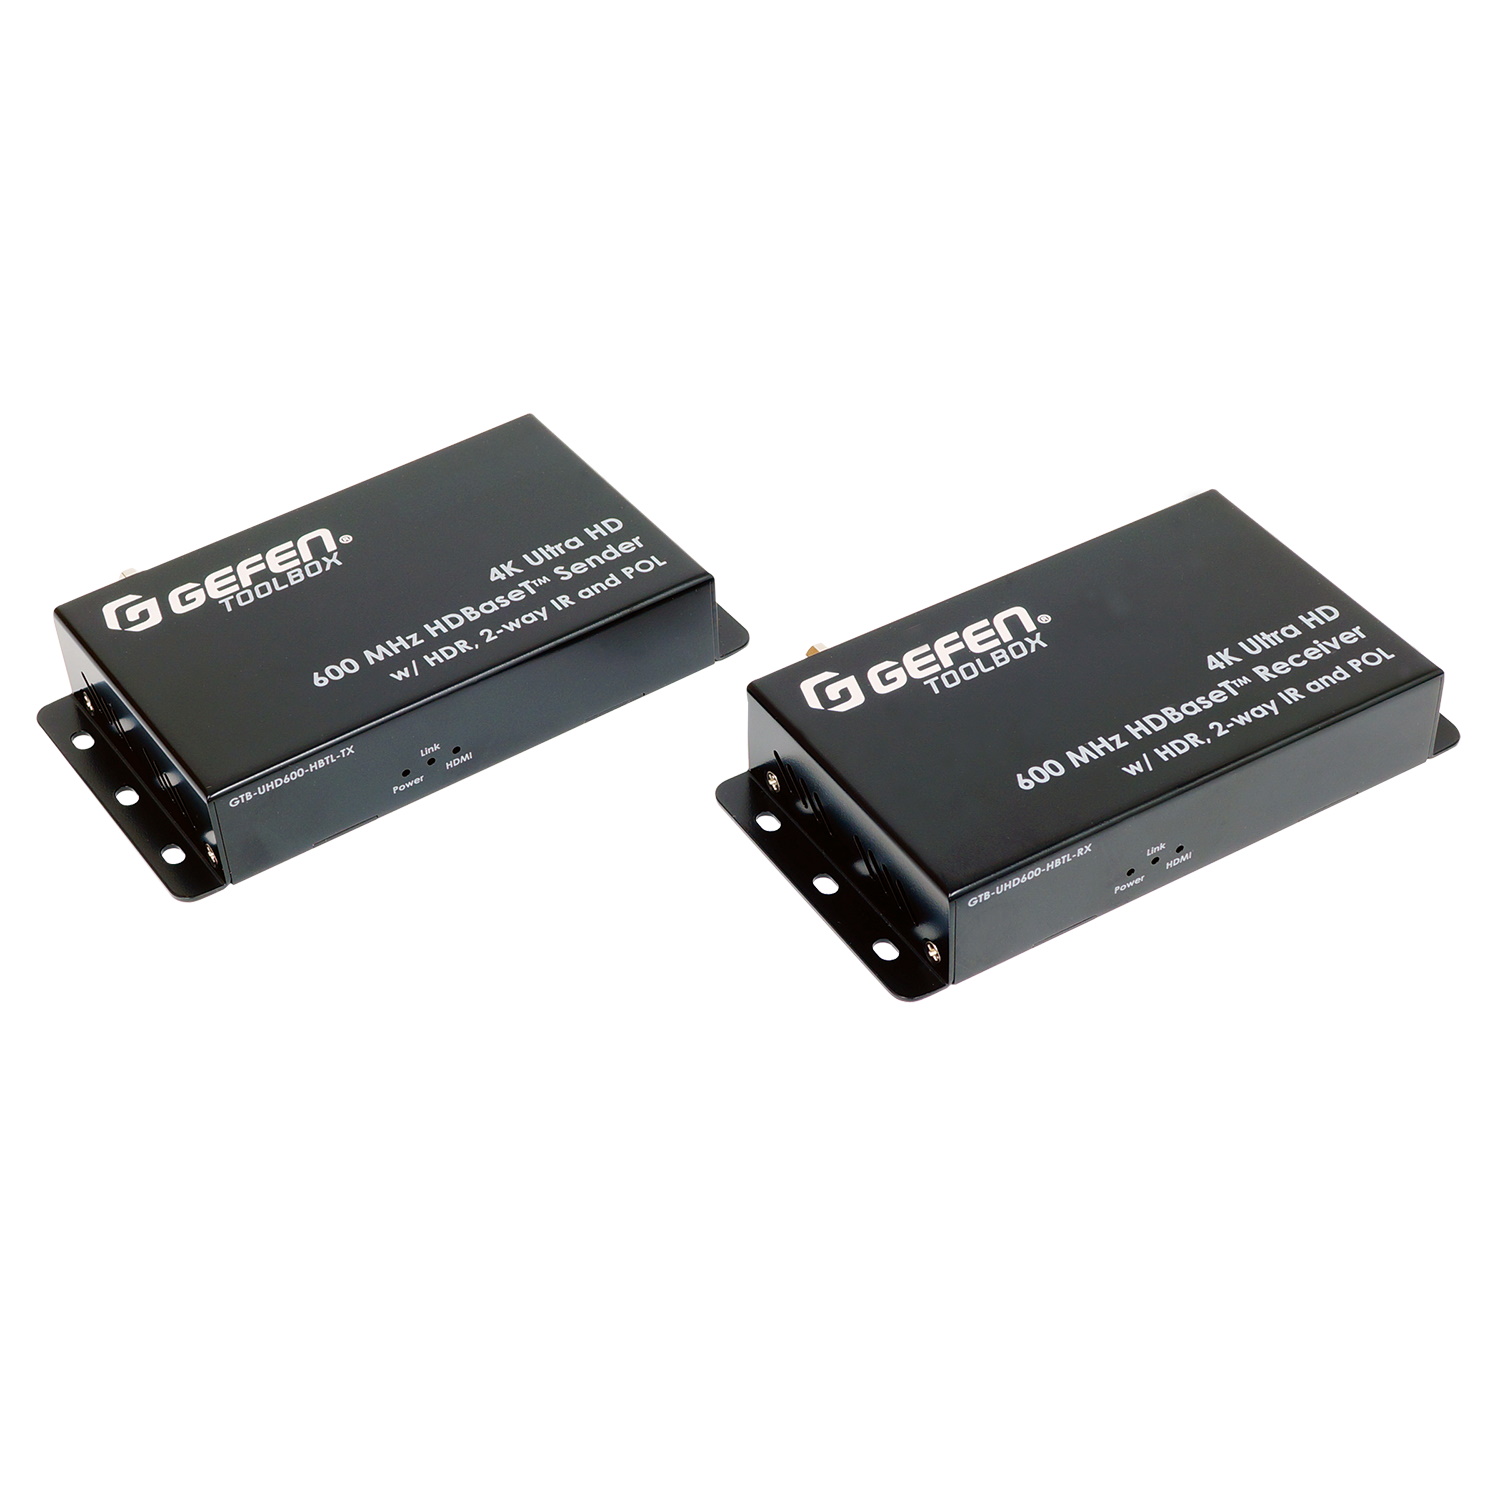 HDMI коммутаторы, разветвители, повторители Gefen GTB-UHD600-HBTL hdmi коммутаторы разветвители повторители dr hd дополнительный приемник hdmi по ip dr hd ex 120 lir hd